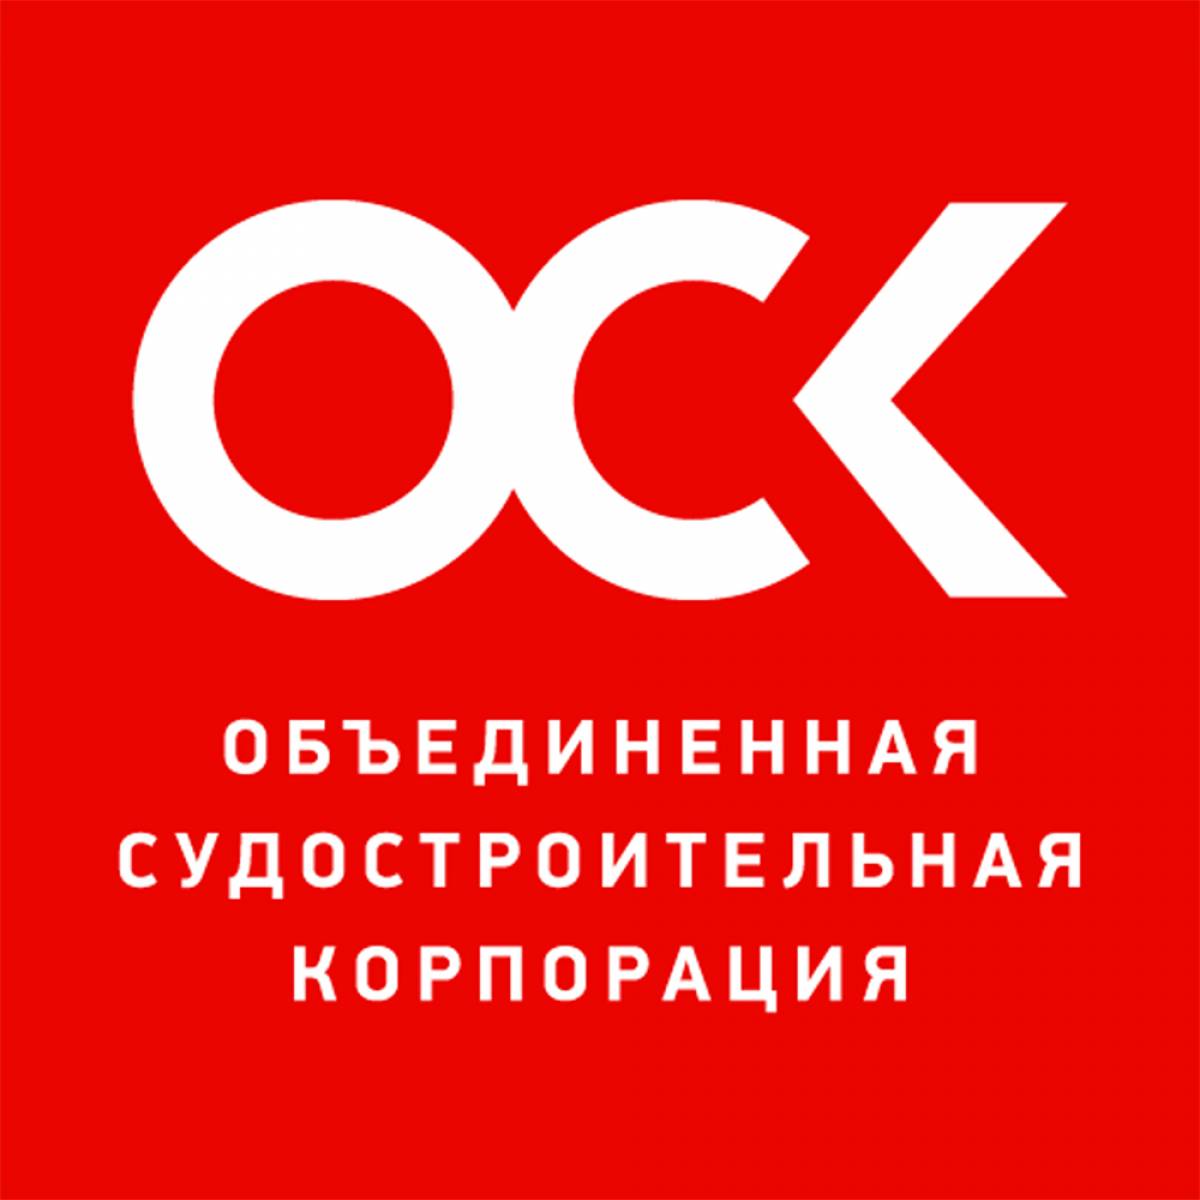 Логотип ОСК.jpg